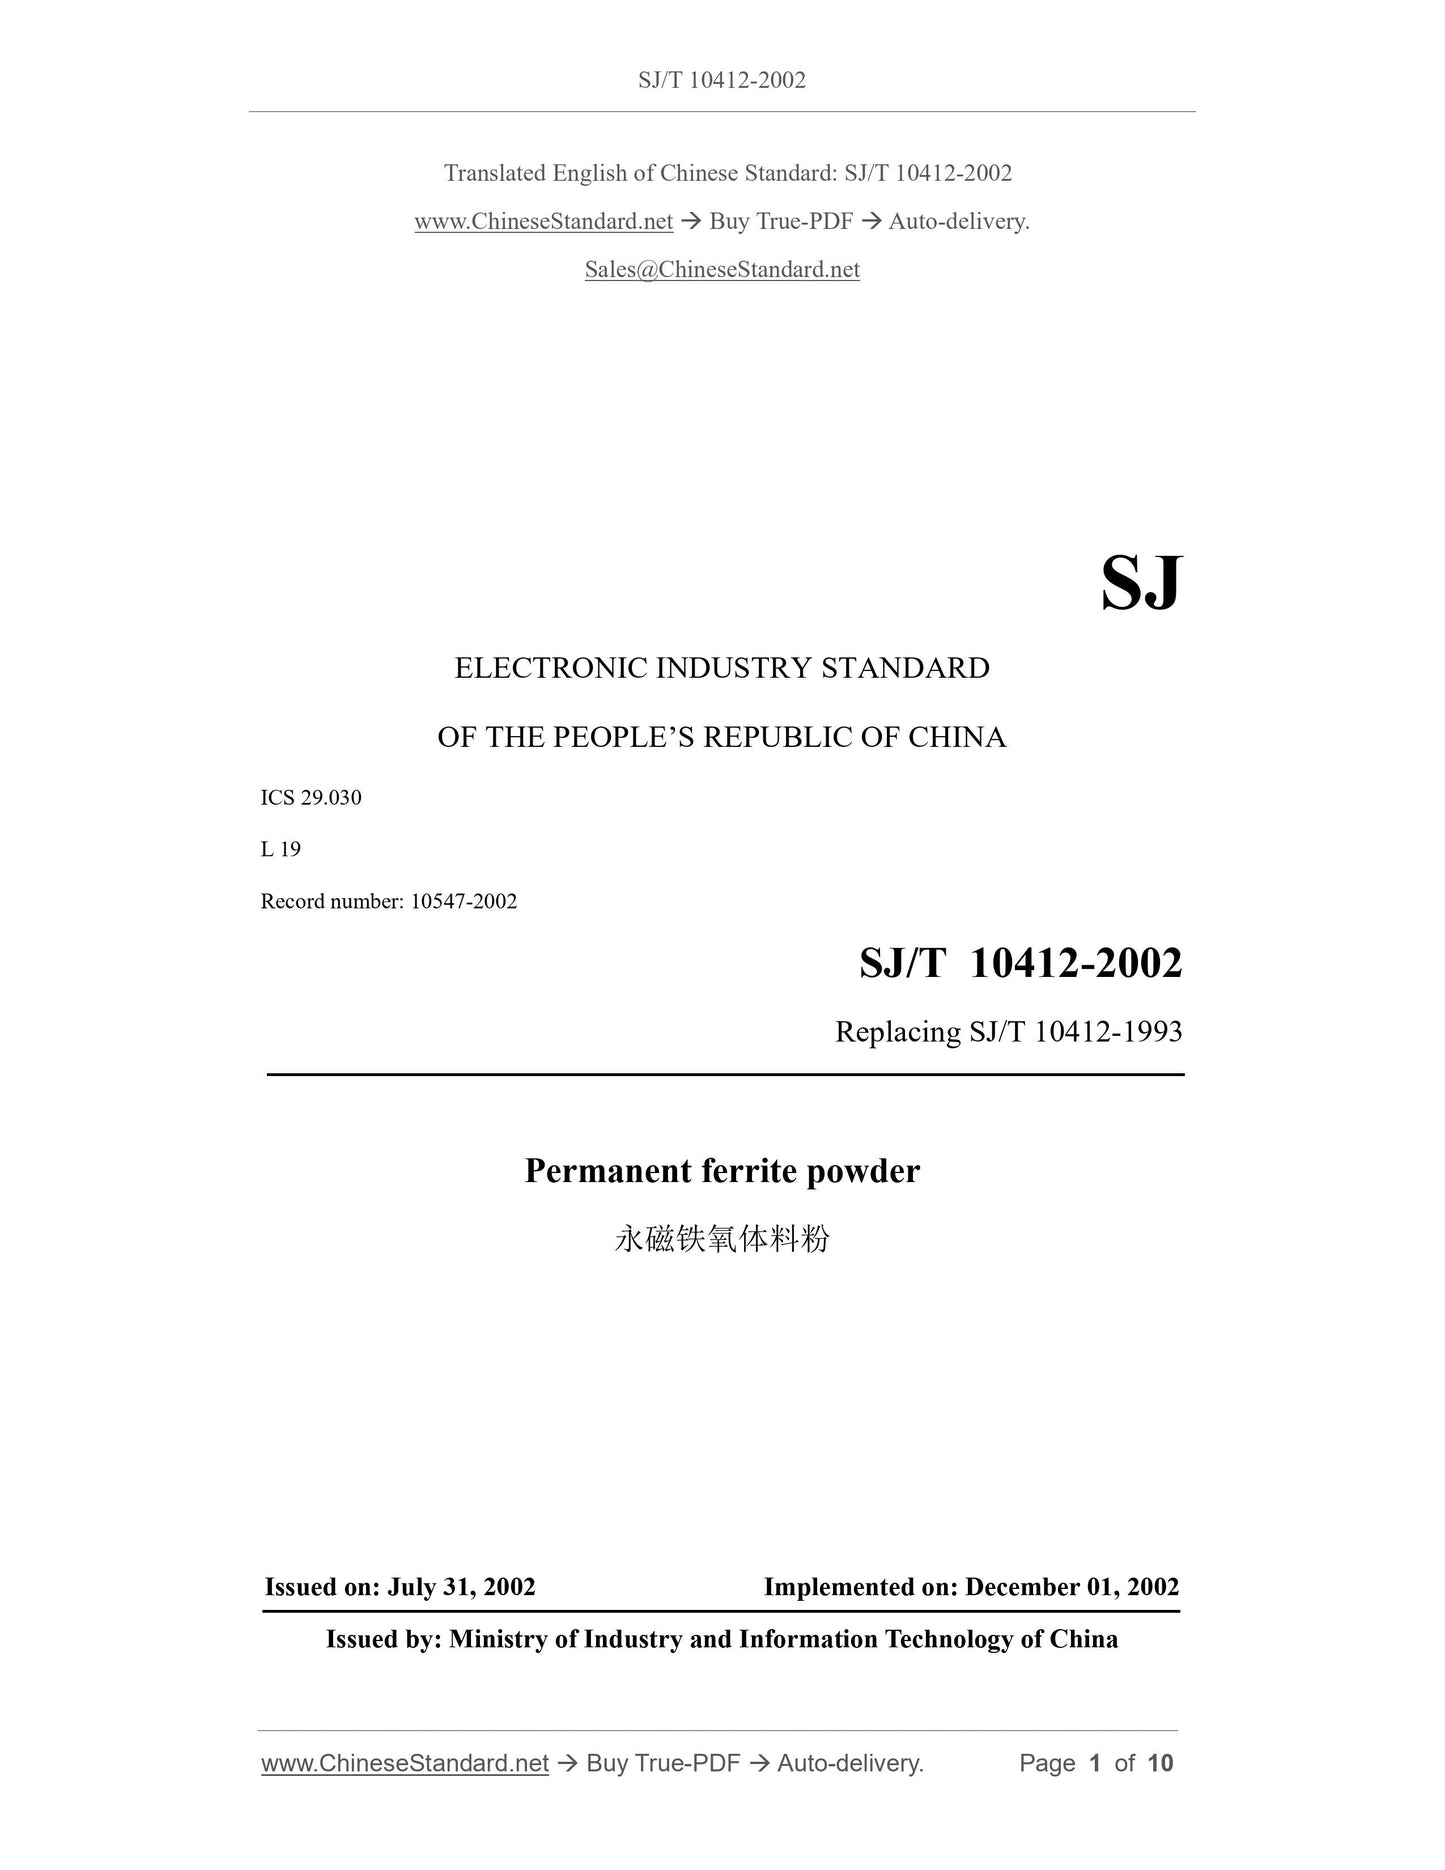 SJ/T 10412-2002 Page 1